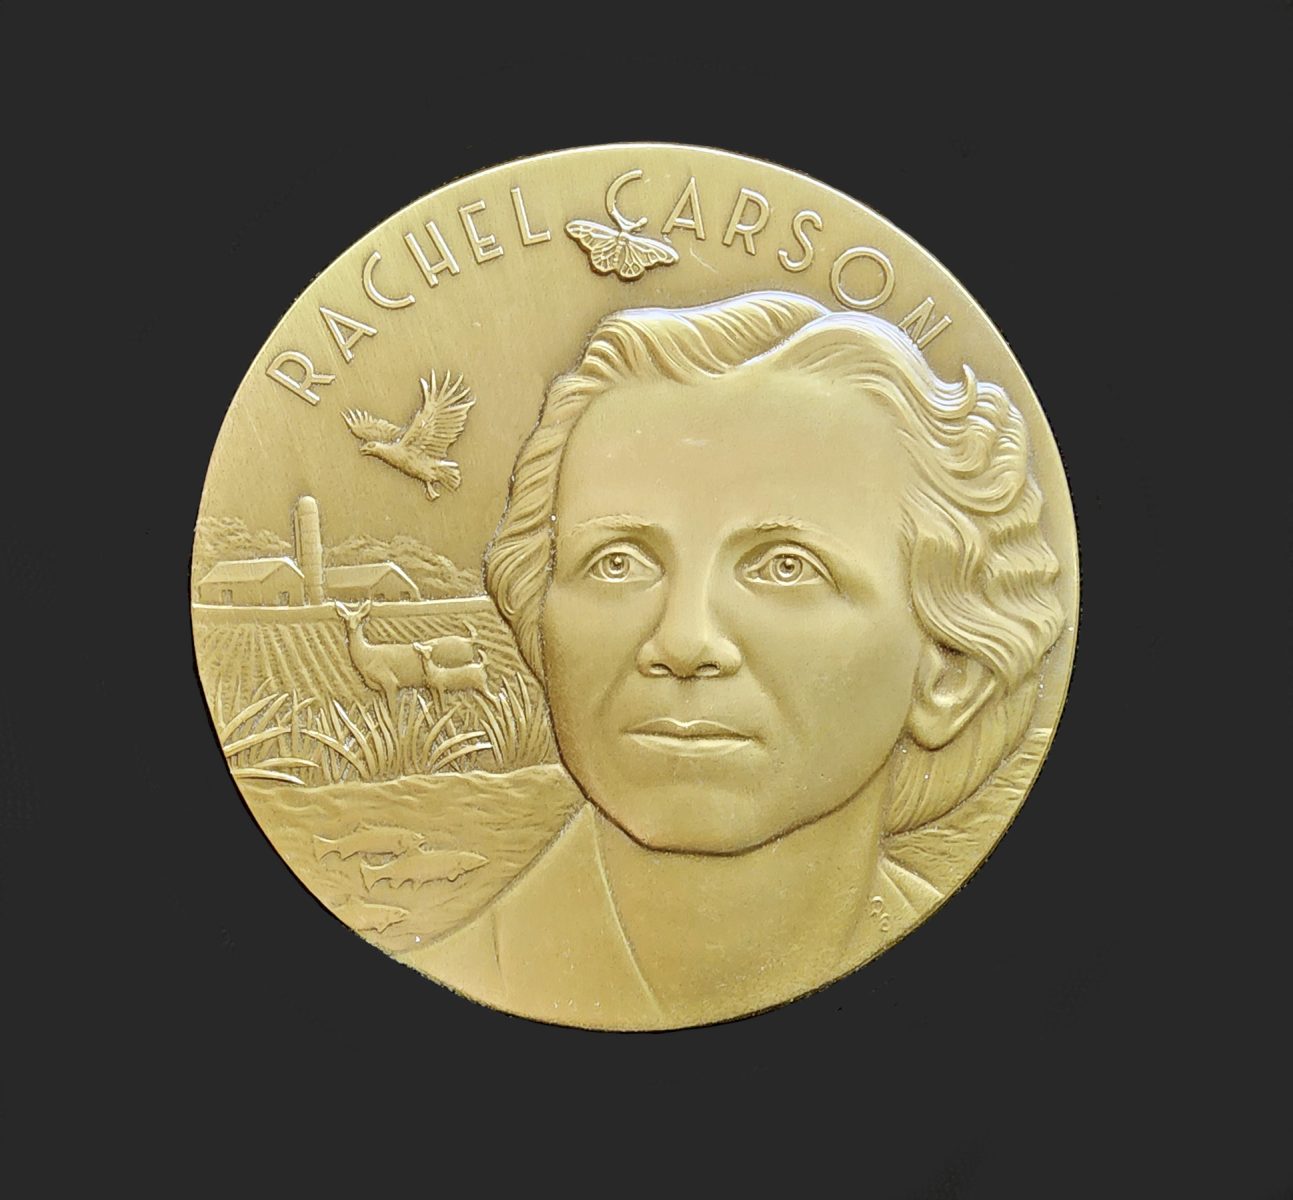 Rachel Carson Medal
by Don Everhart

